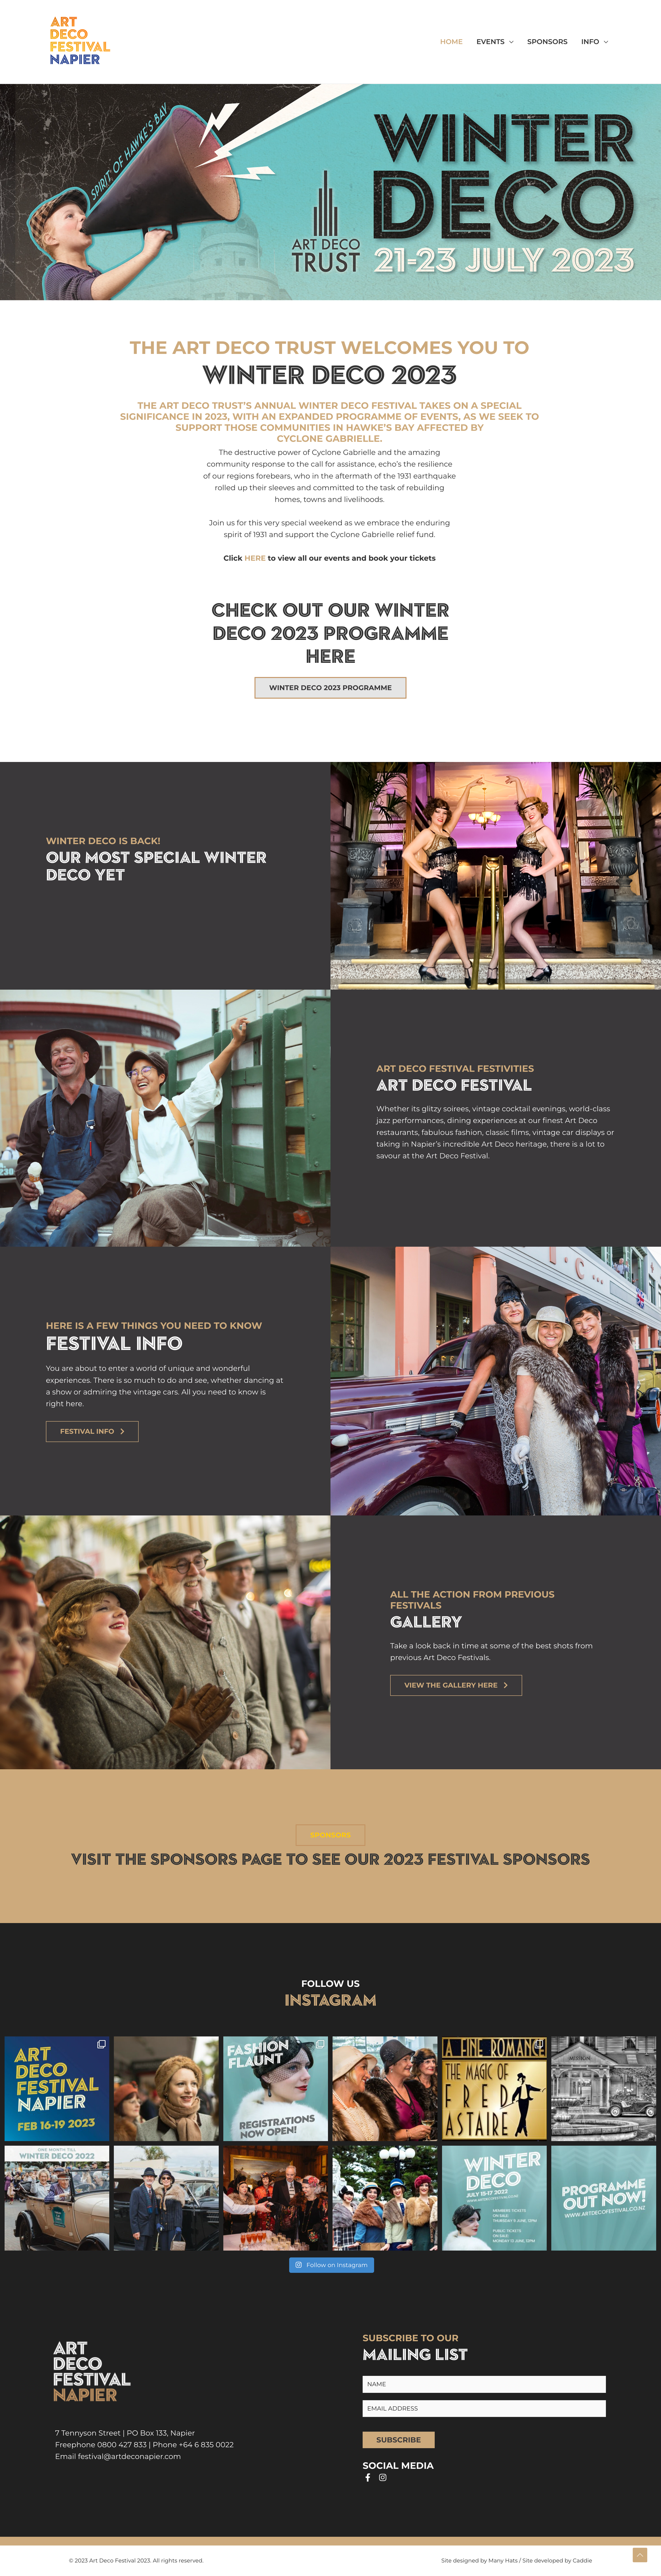 caddie-digital-website-design-art-deco-festival